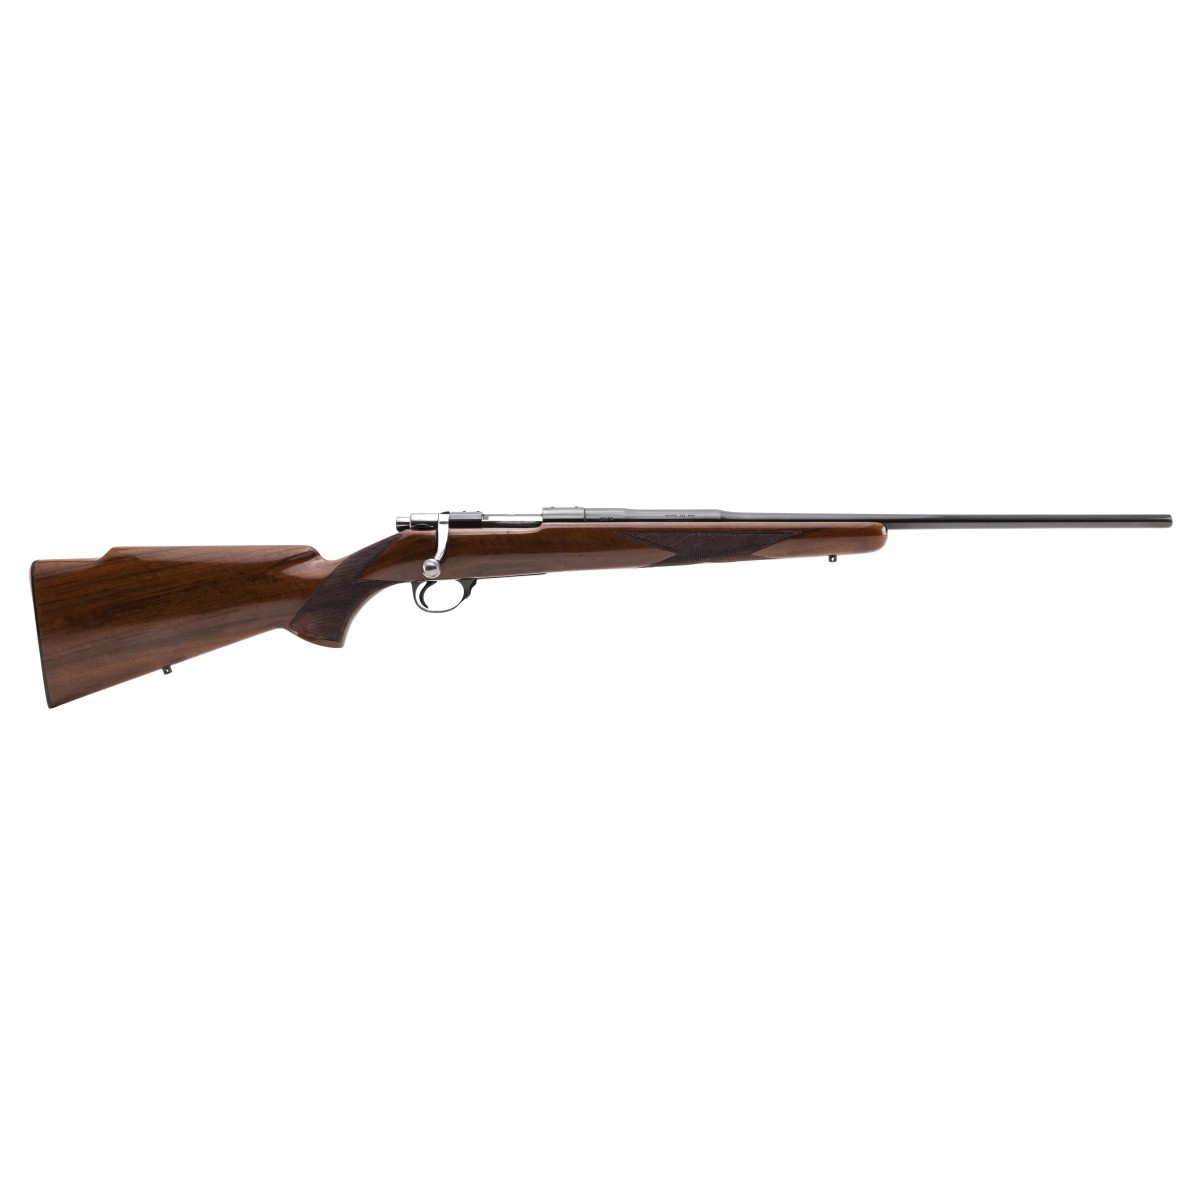 Browning Safari .222 Rem caliber rifle for sale.